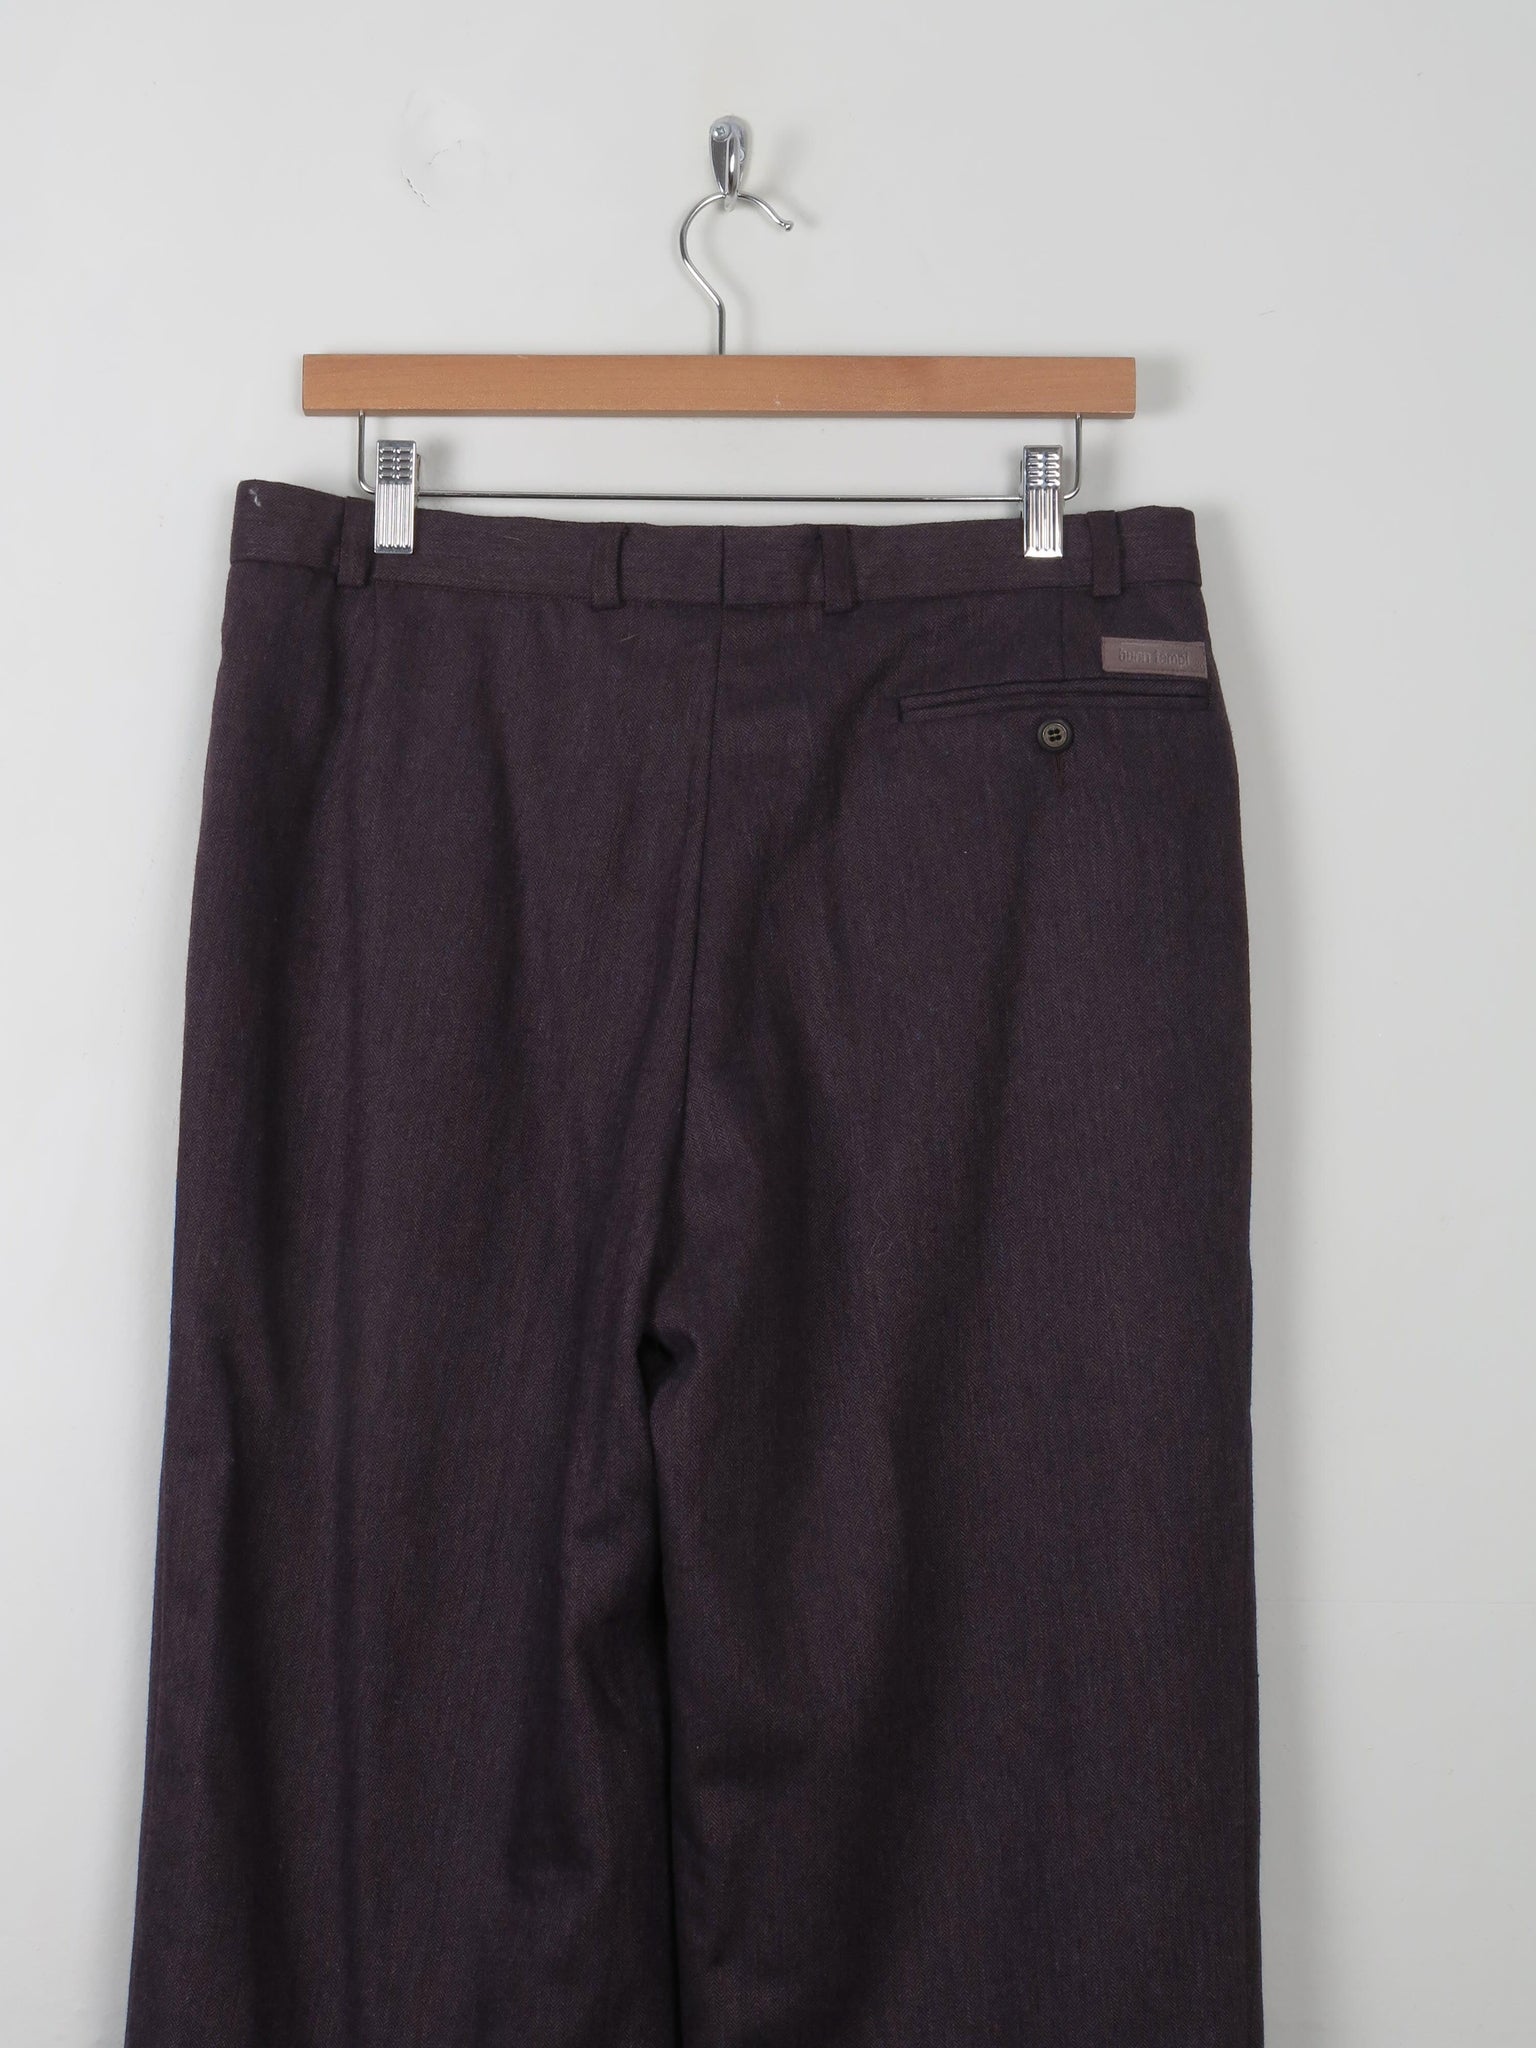 Men's Vintage Wool Trousers Wine/Brown 33" W 31"L - The Harlequin